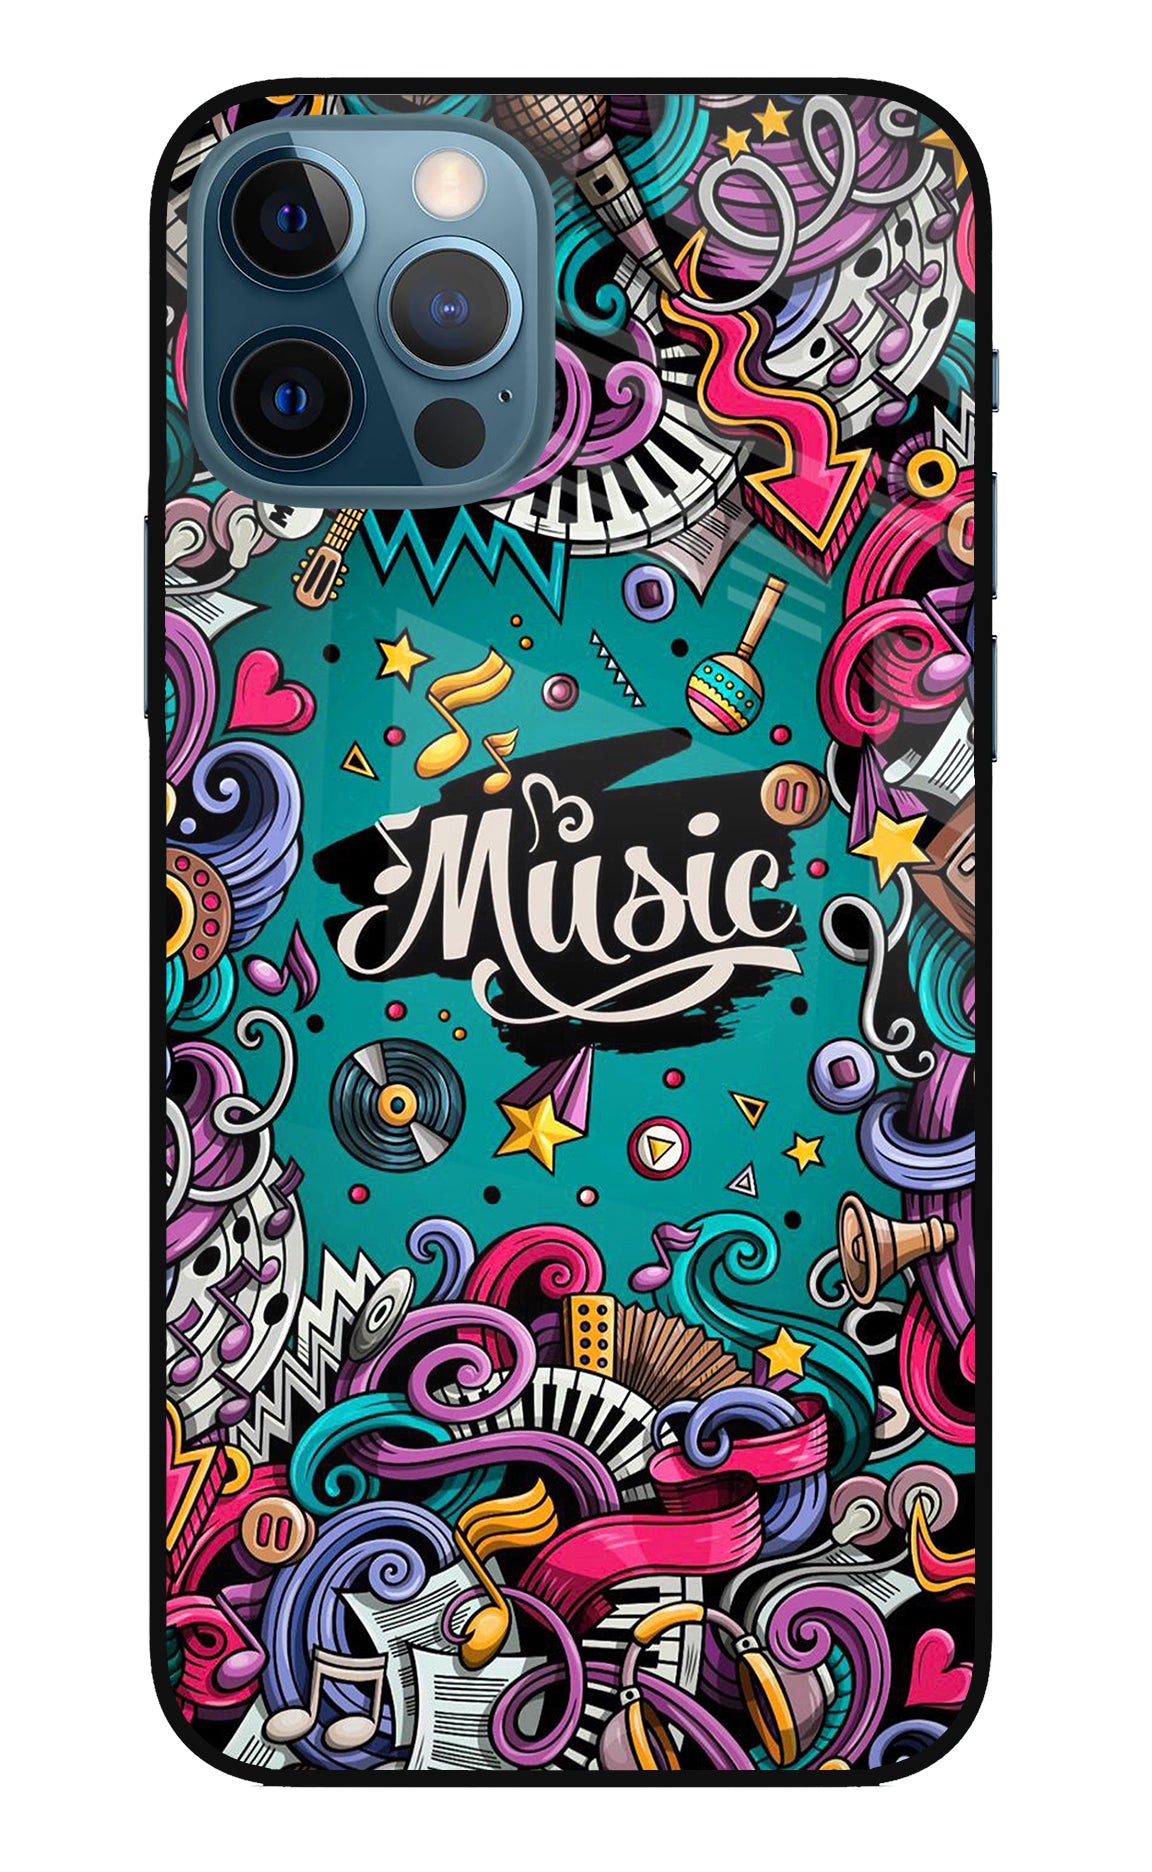 Music Graffiti iPhone 12 Pro Back Cover